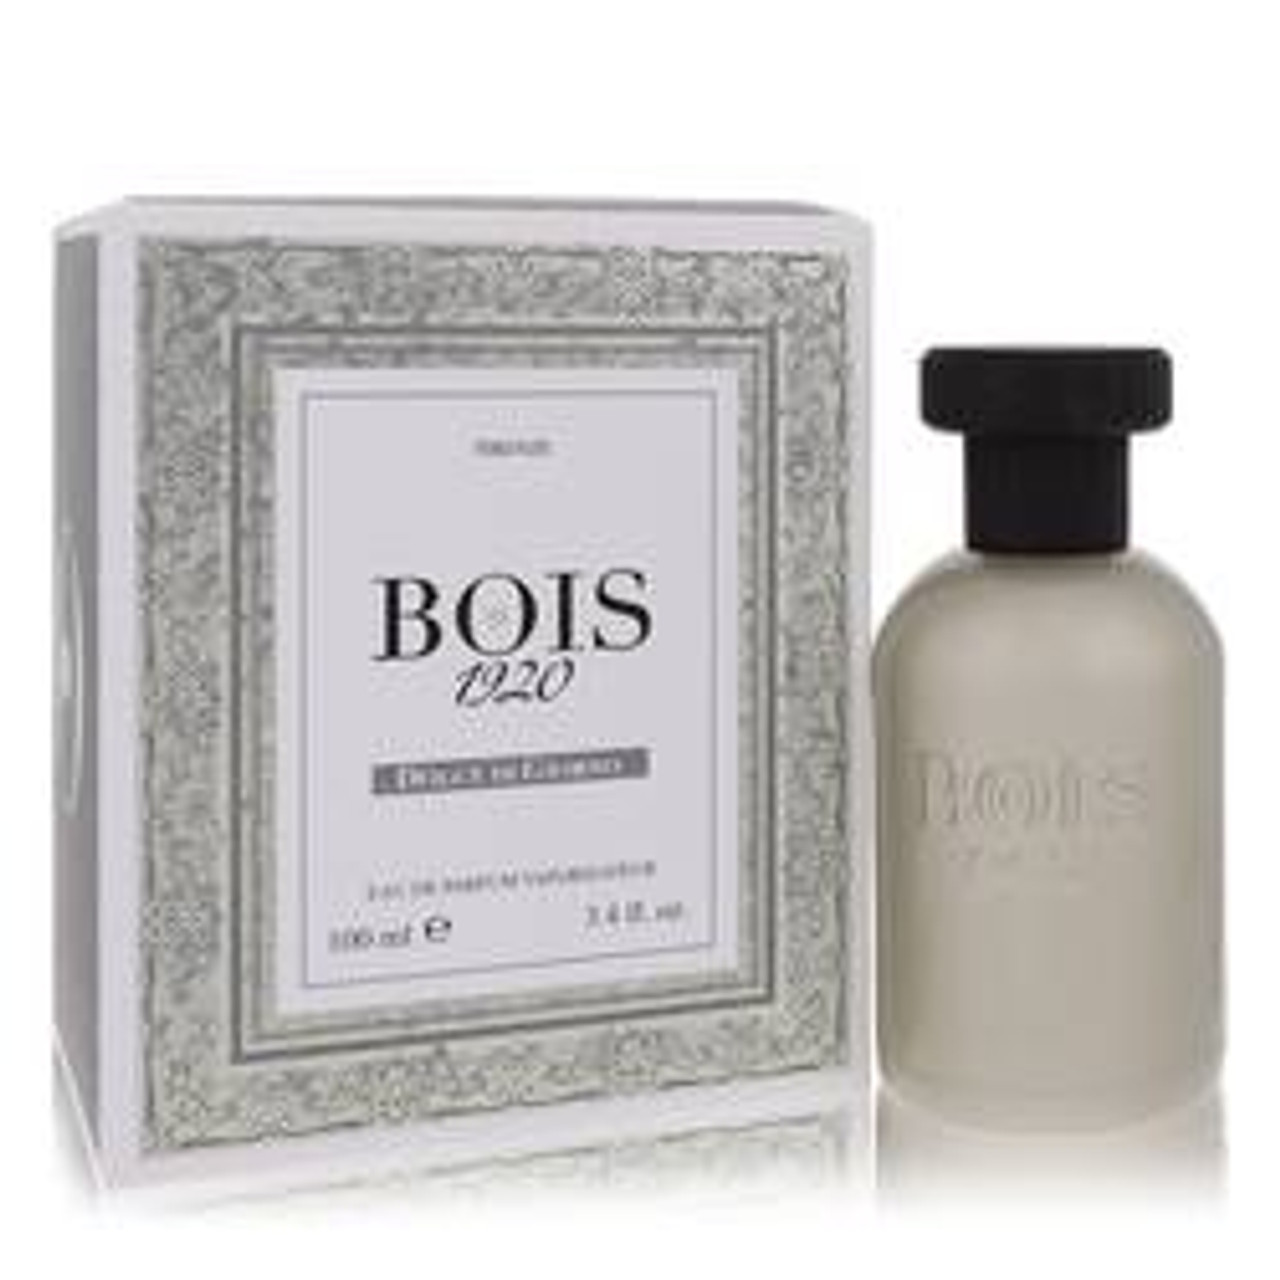 Dolce Di Giorno Perfume By Bois 1920 Eau De Parfum Spray 3.4 oz for Women - *Pre-Order